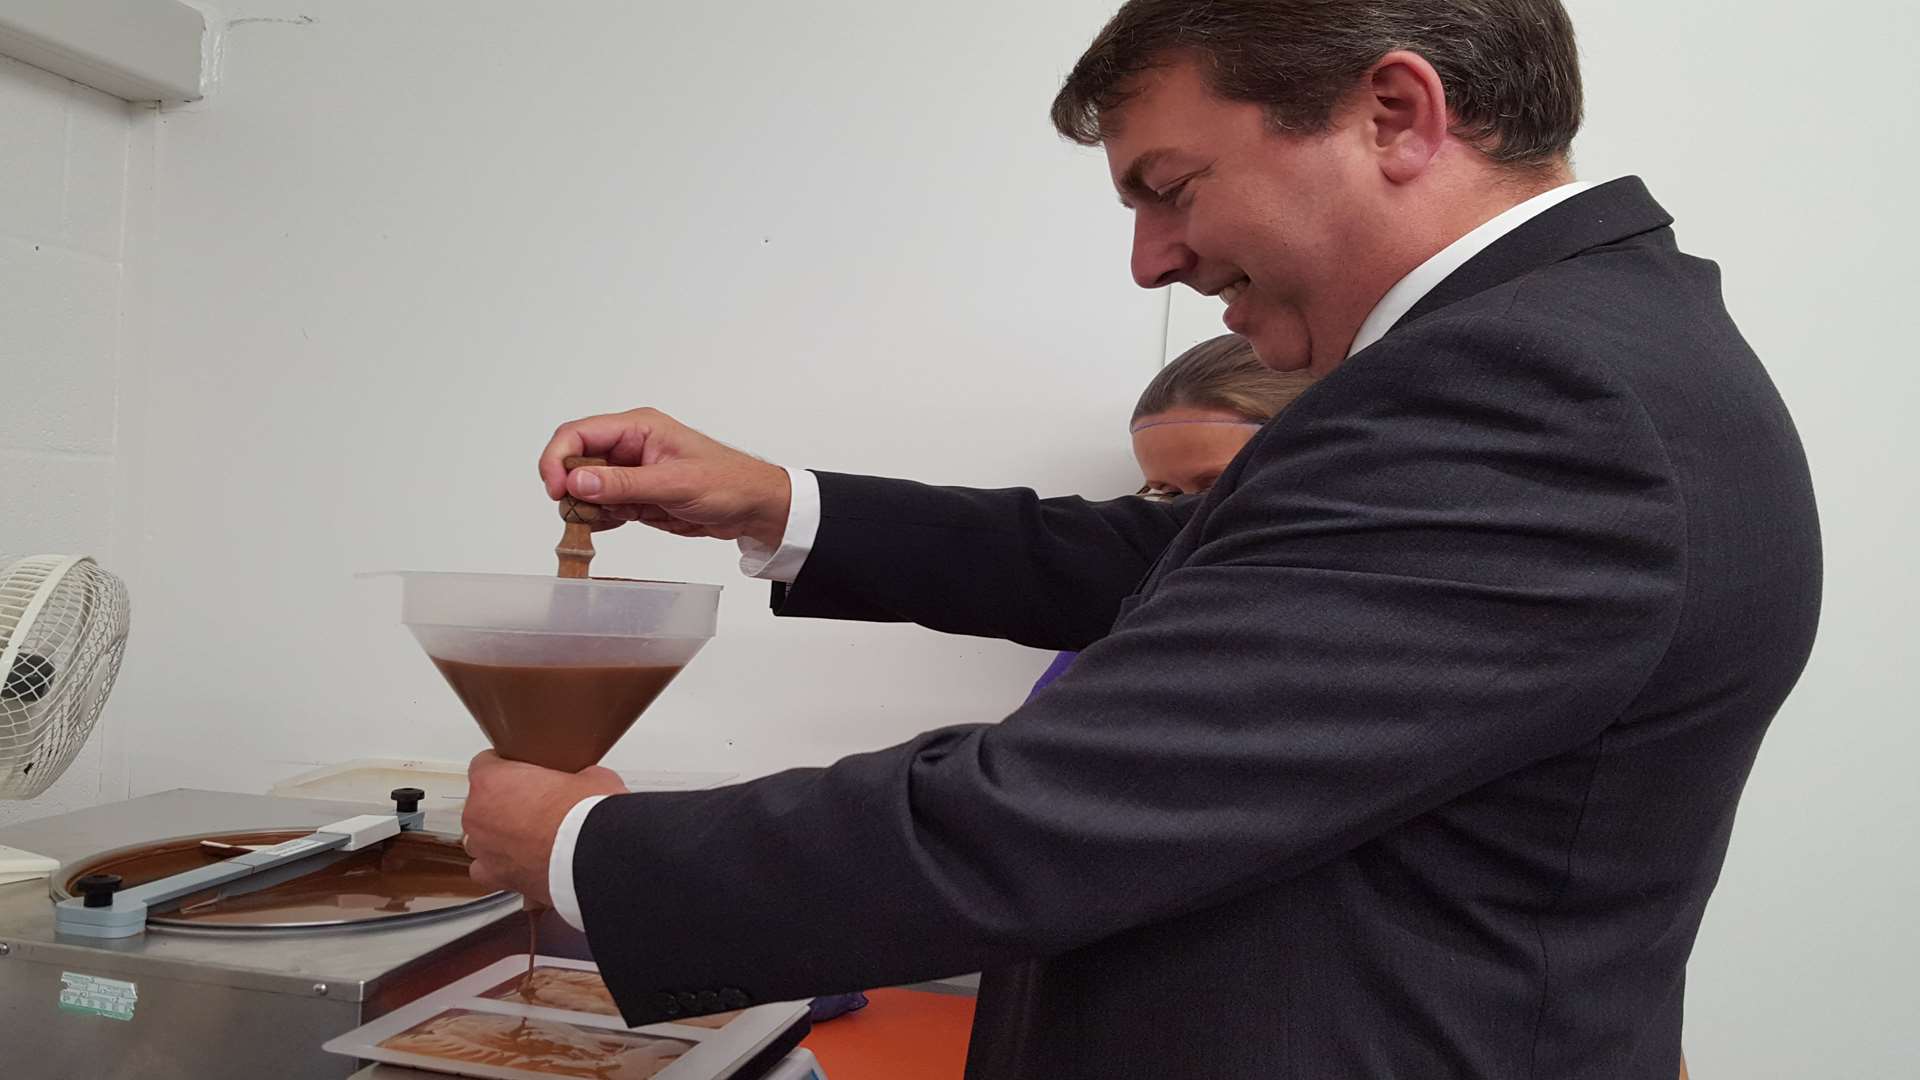 Dartford MP Gareth Johnson has a go at chocolate making